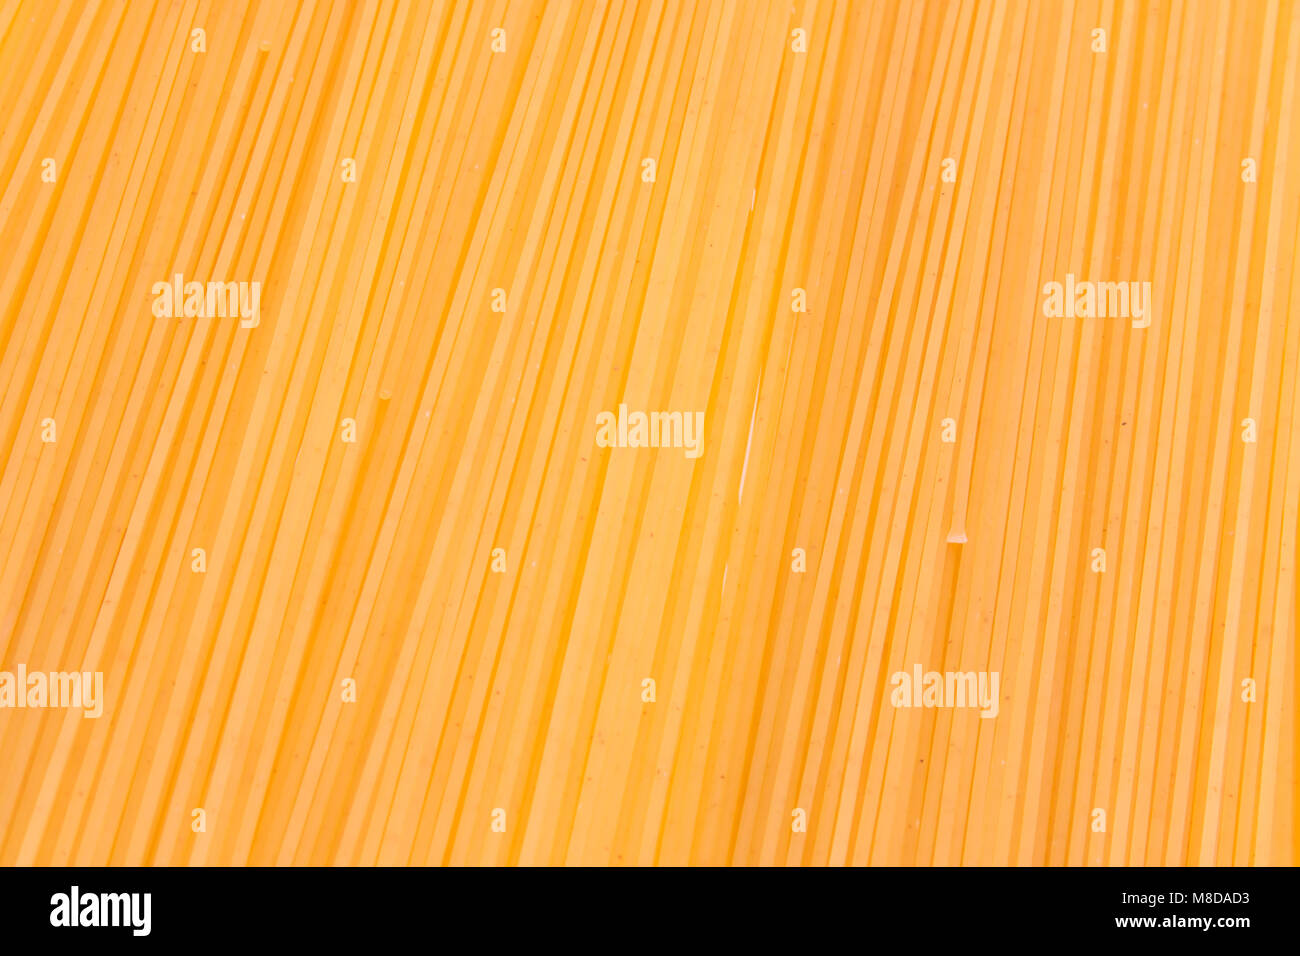 Orange raw spaghetti line background, Stock Photo